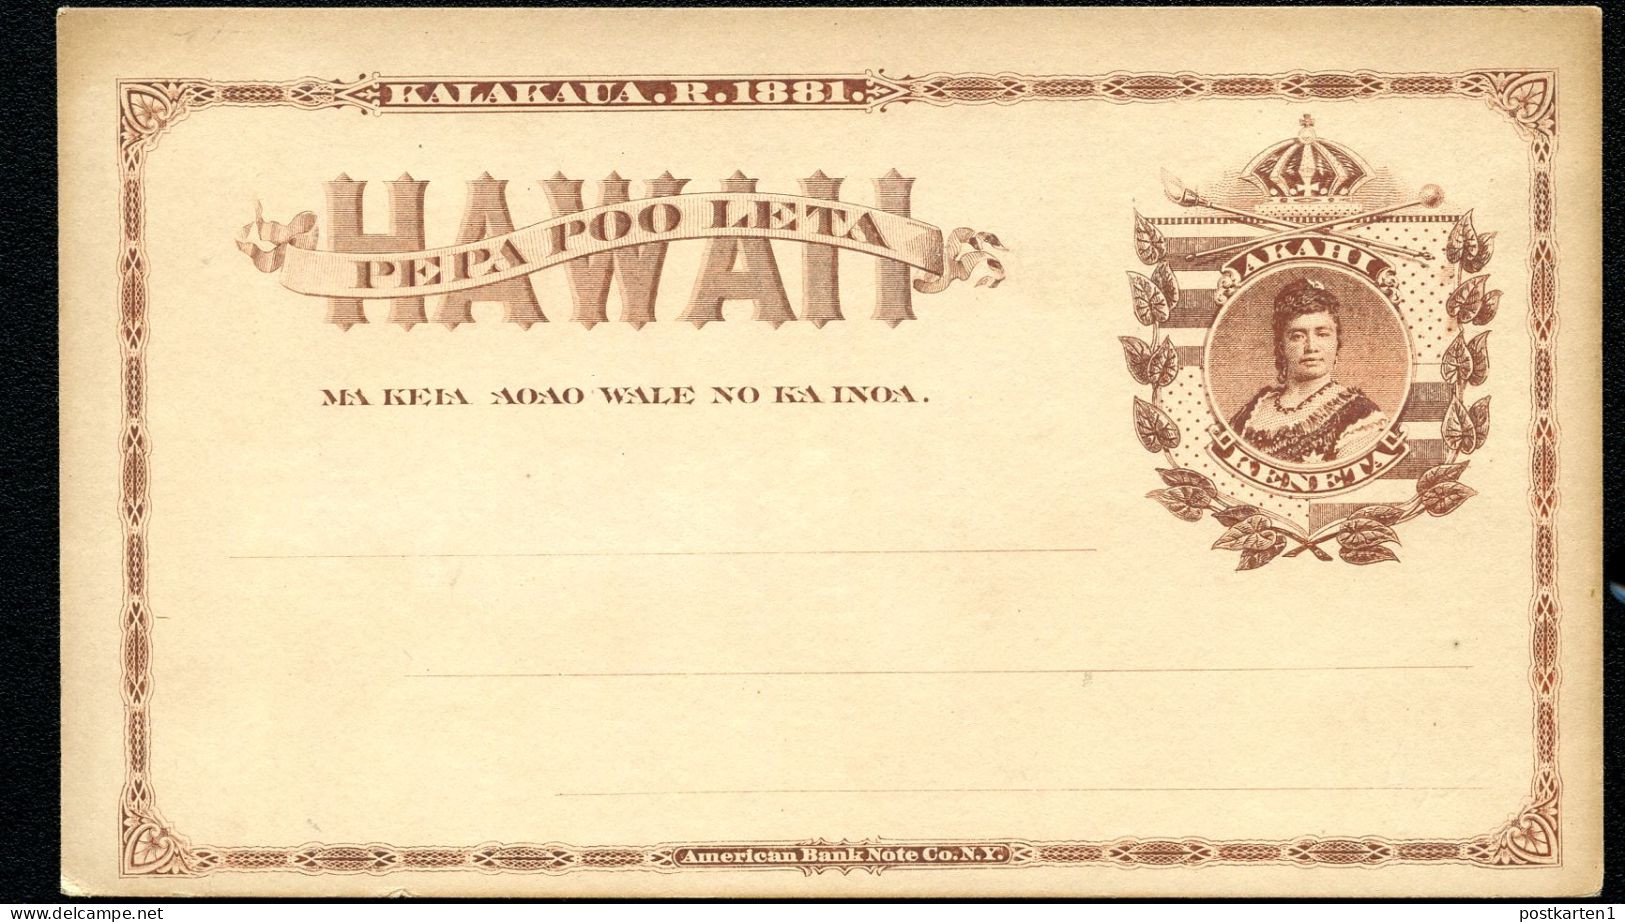 Hawaii Postal Card UX1 Gill Type5 Mint Xf 1882 - Hawai